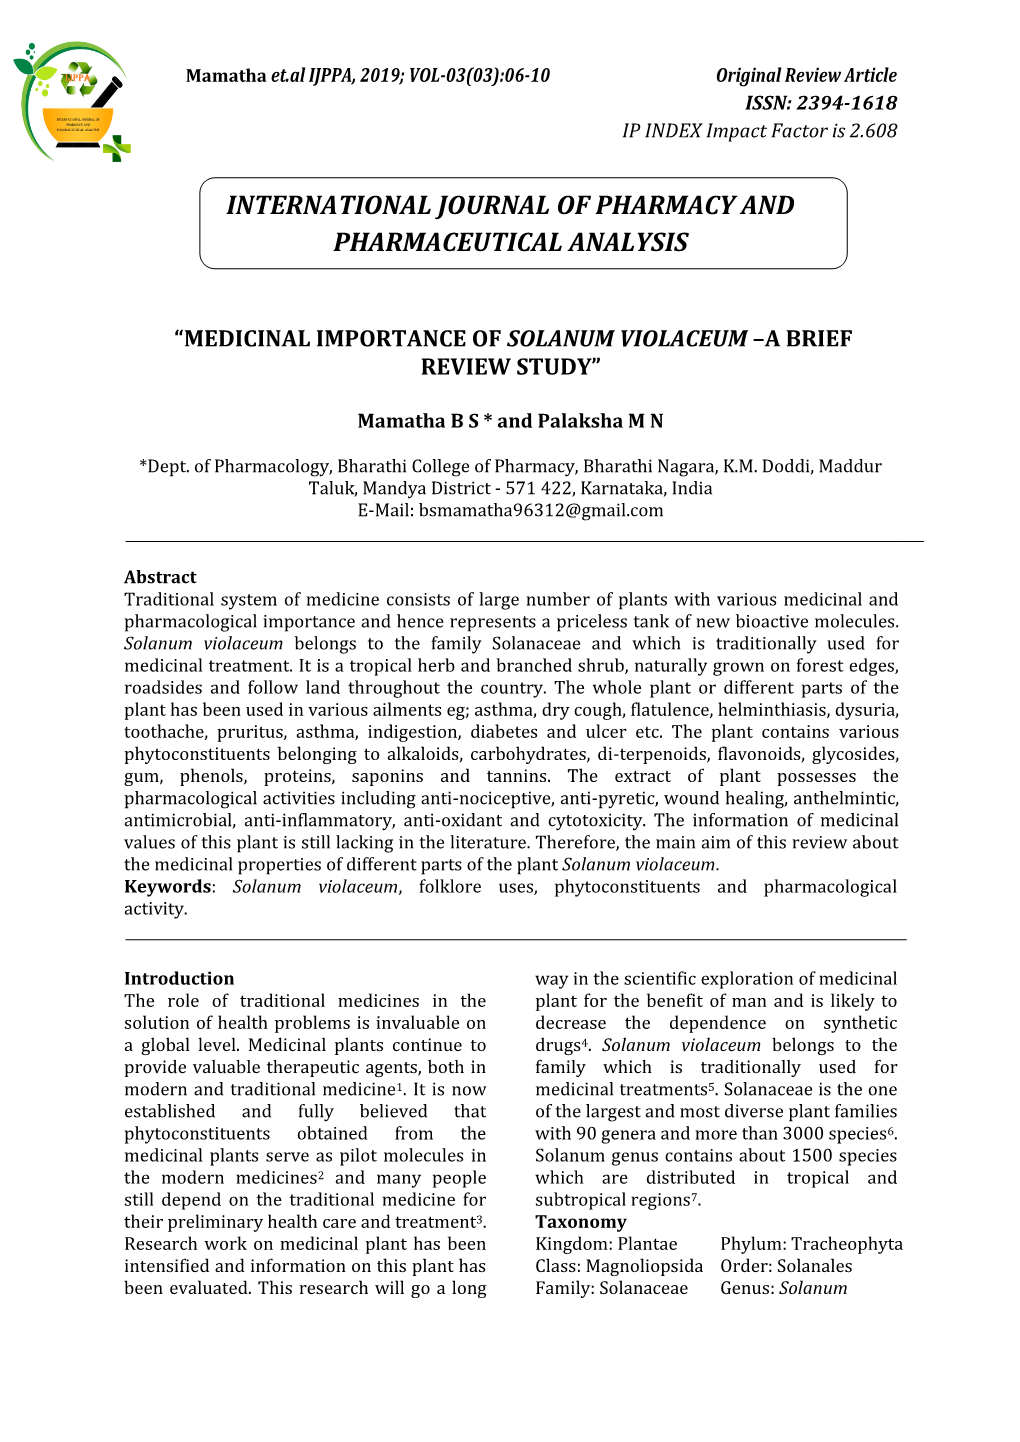 IJPPA | International Journal of Pharmacy and Pharmaceutical